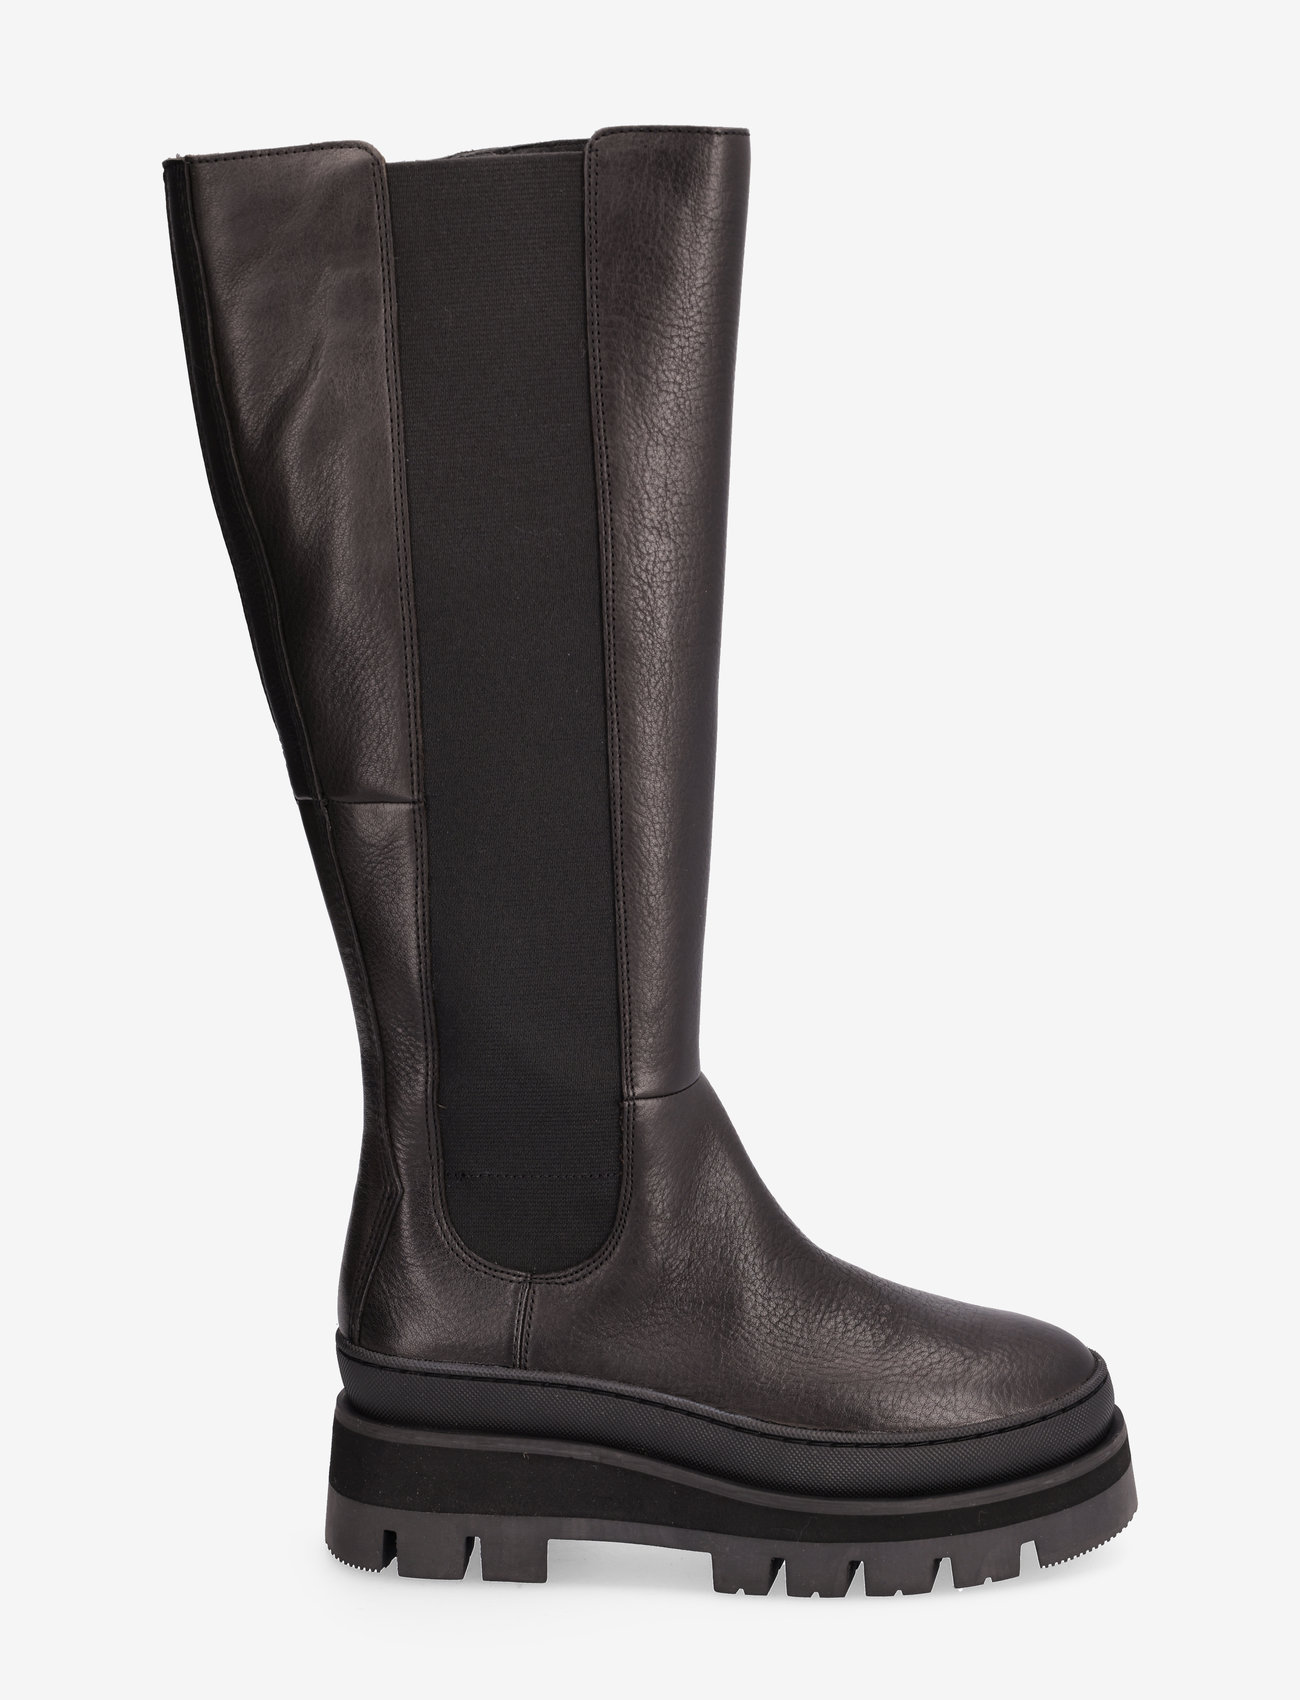 Clarks - Orianna2 Hi - knee high boots - black leather - 1